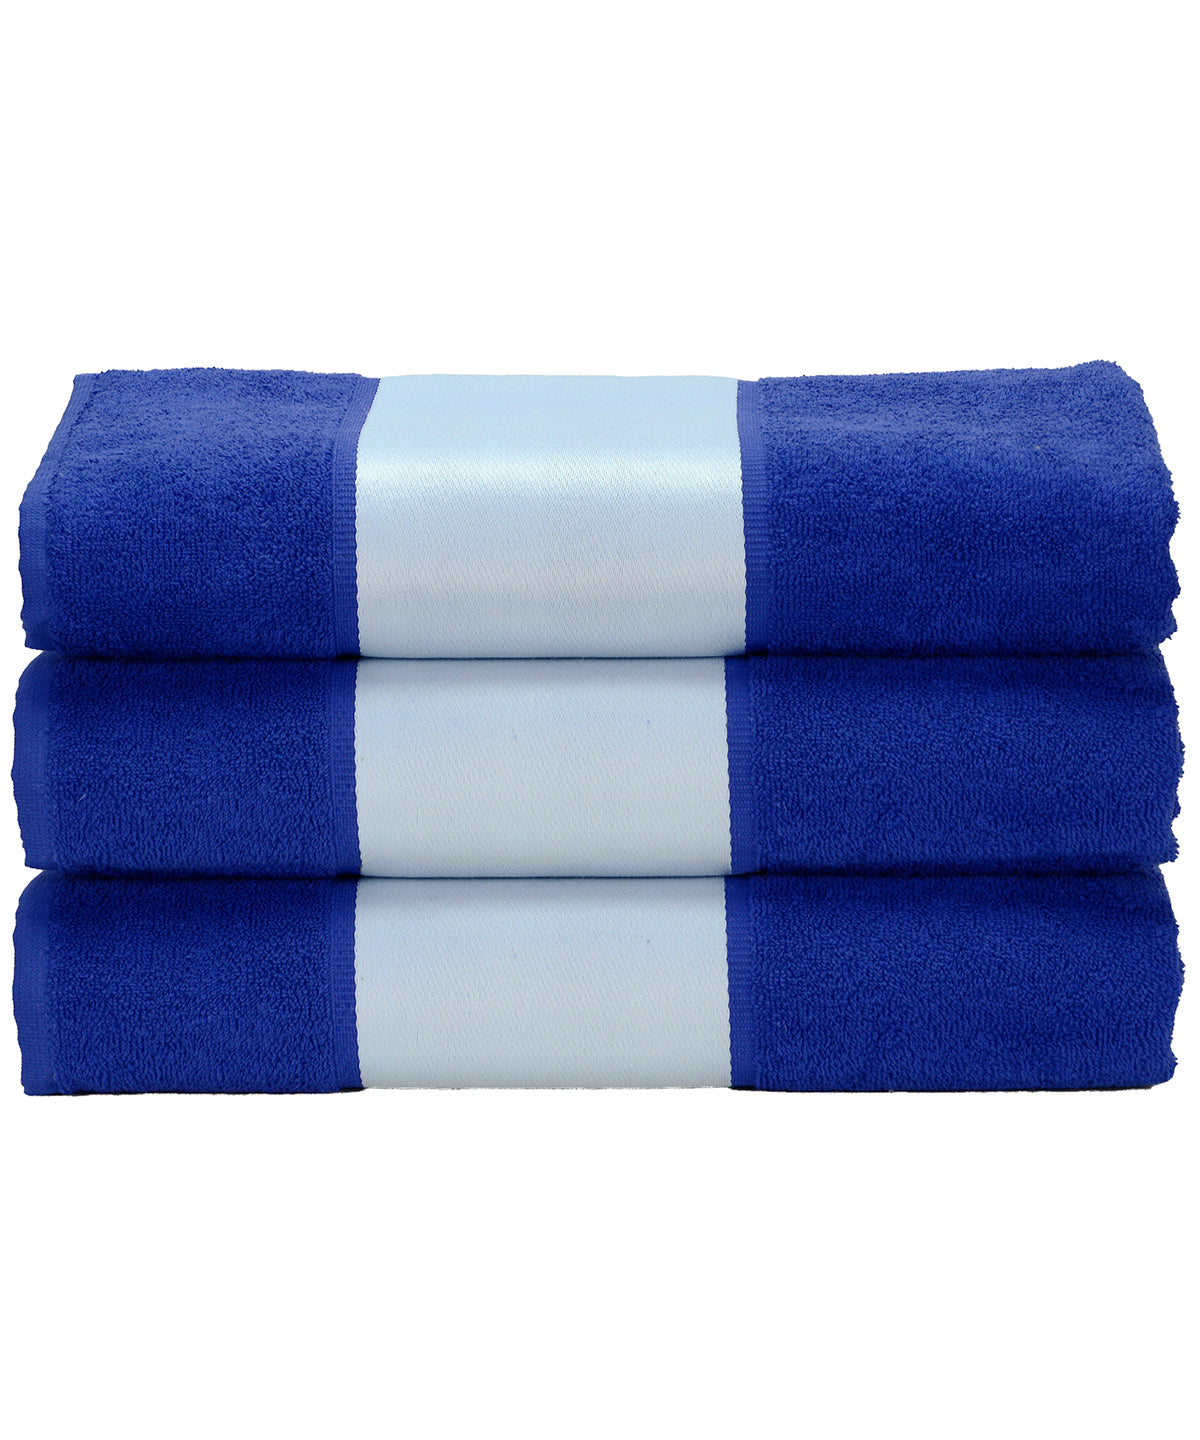 Personalised Towels - Mid Blue A&R Towels ARTG® SUBLI-Me® hand towel